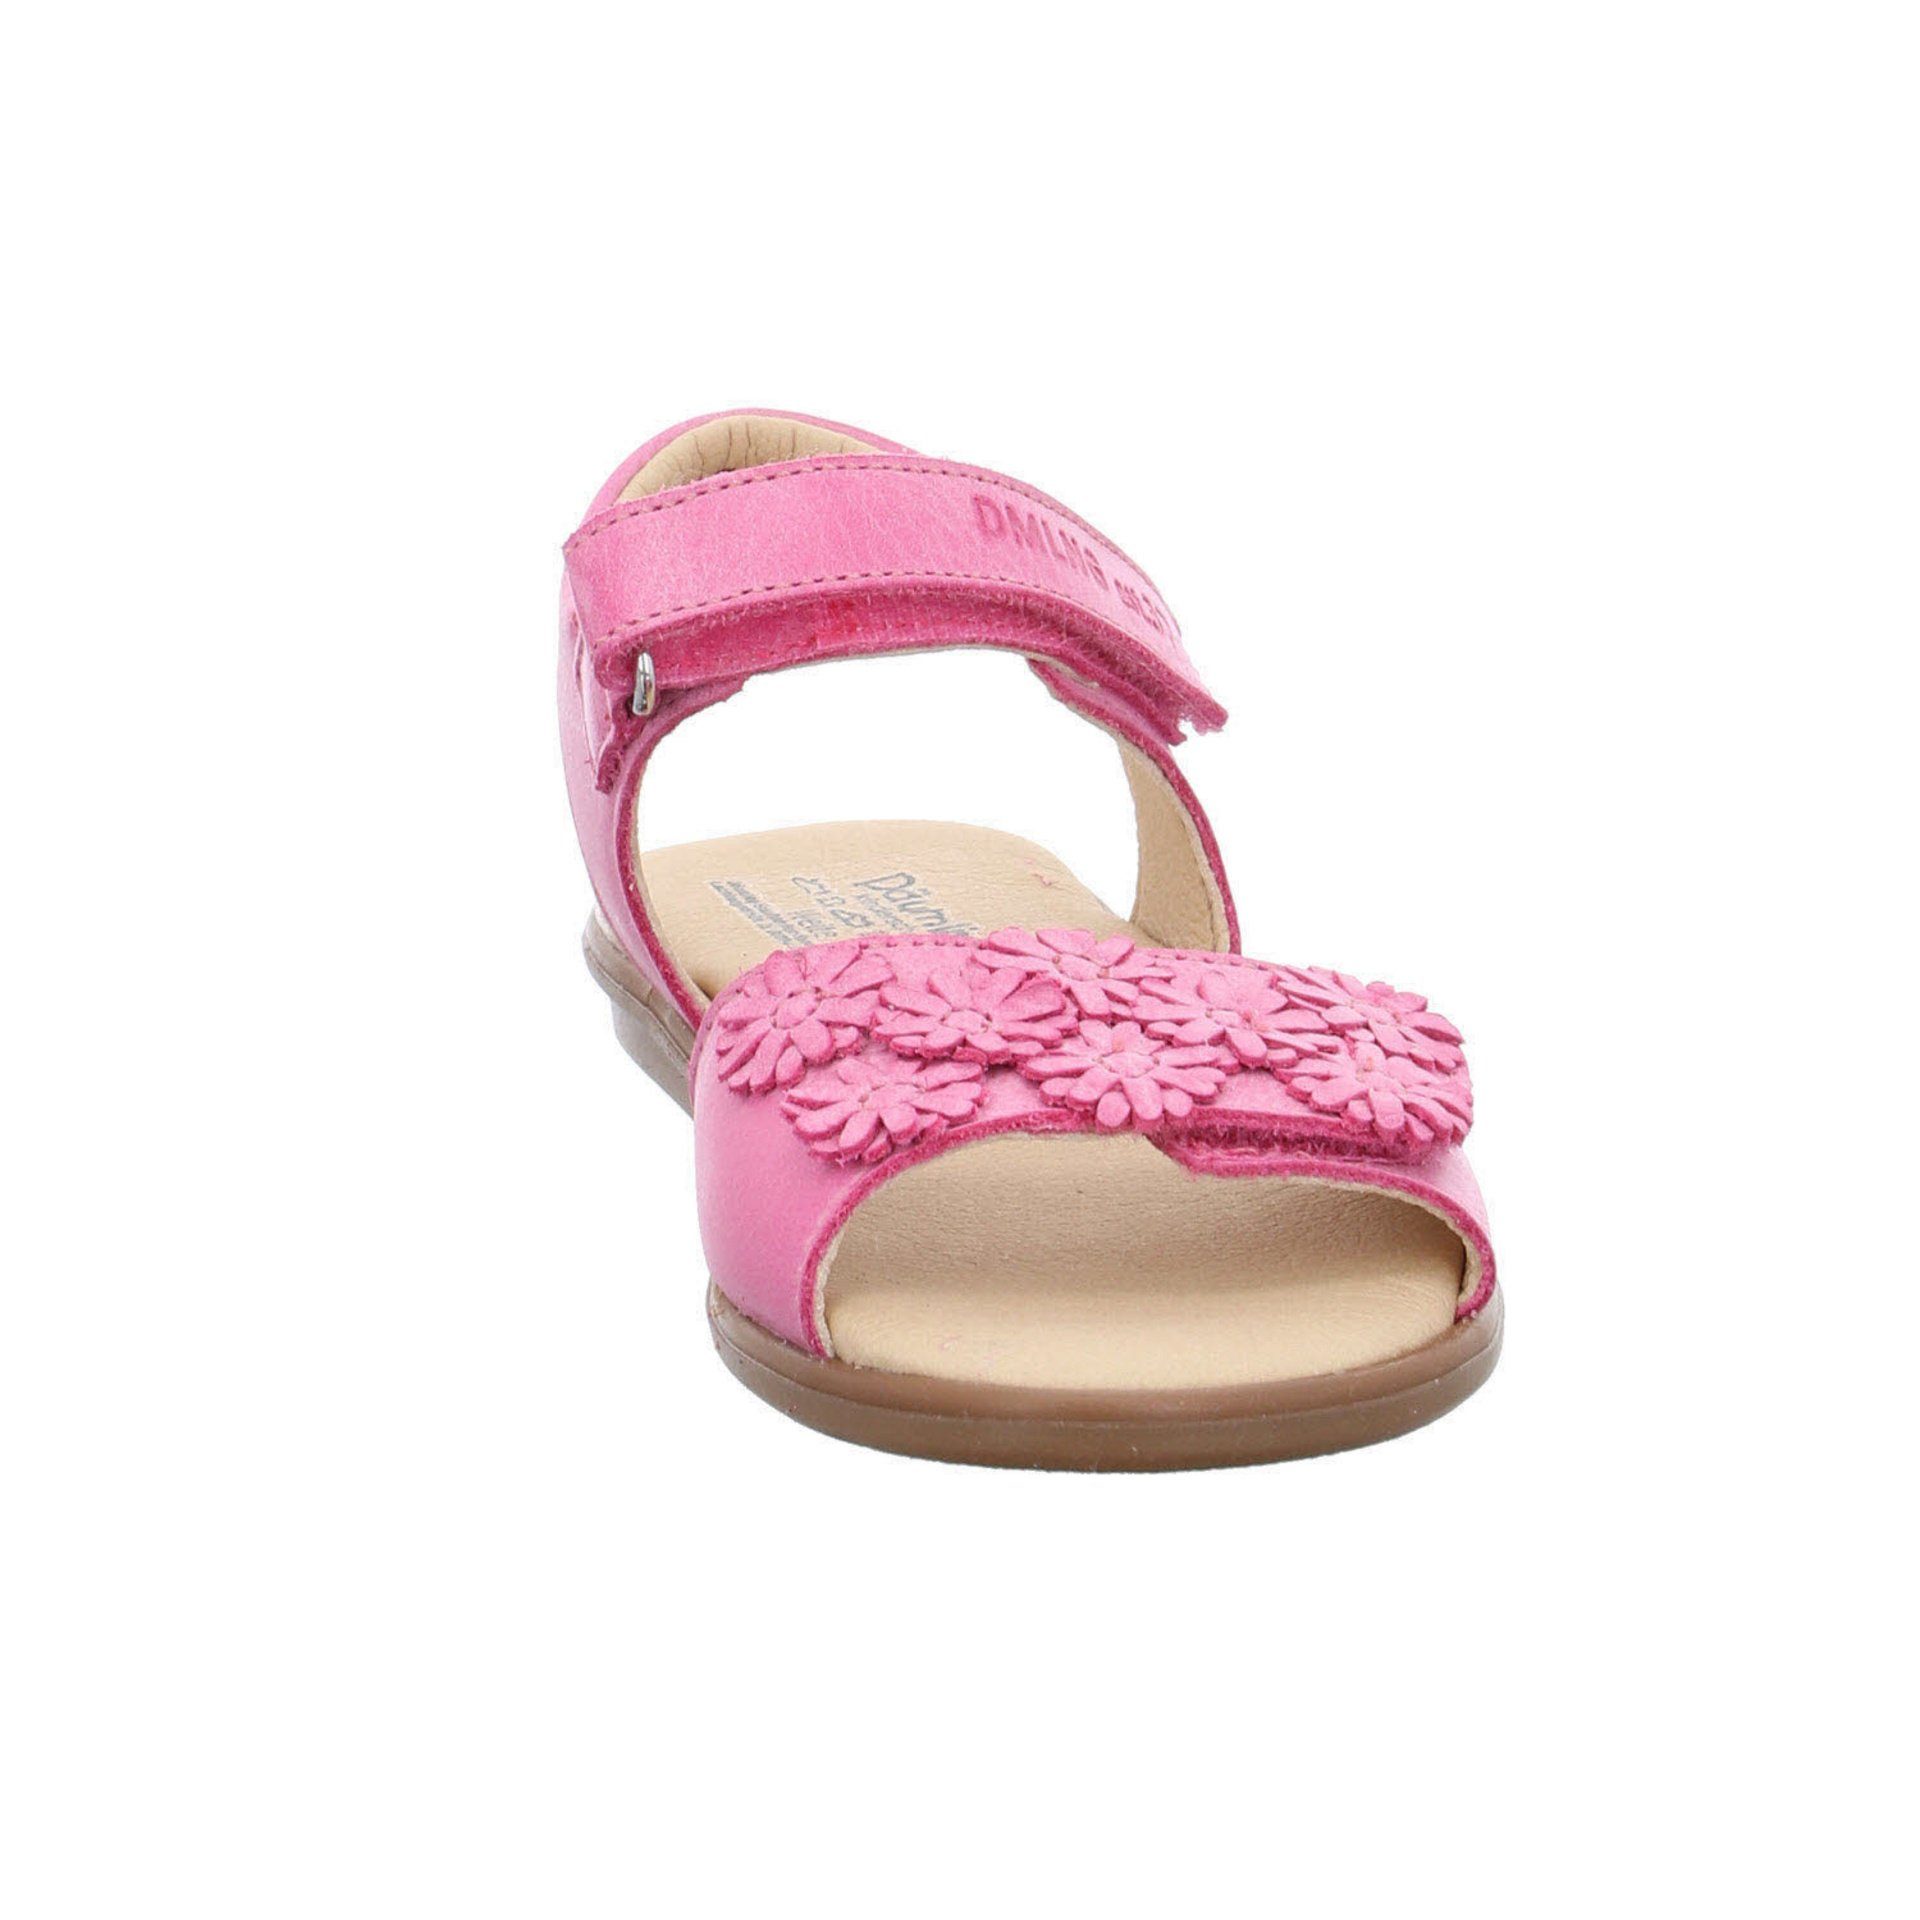 Sandale ciclamino Glattleder Mädchen Sandalen Kinderschuhe Schuhe Raya Däumling (pink) Sandale